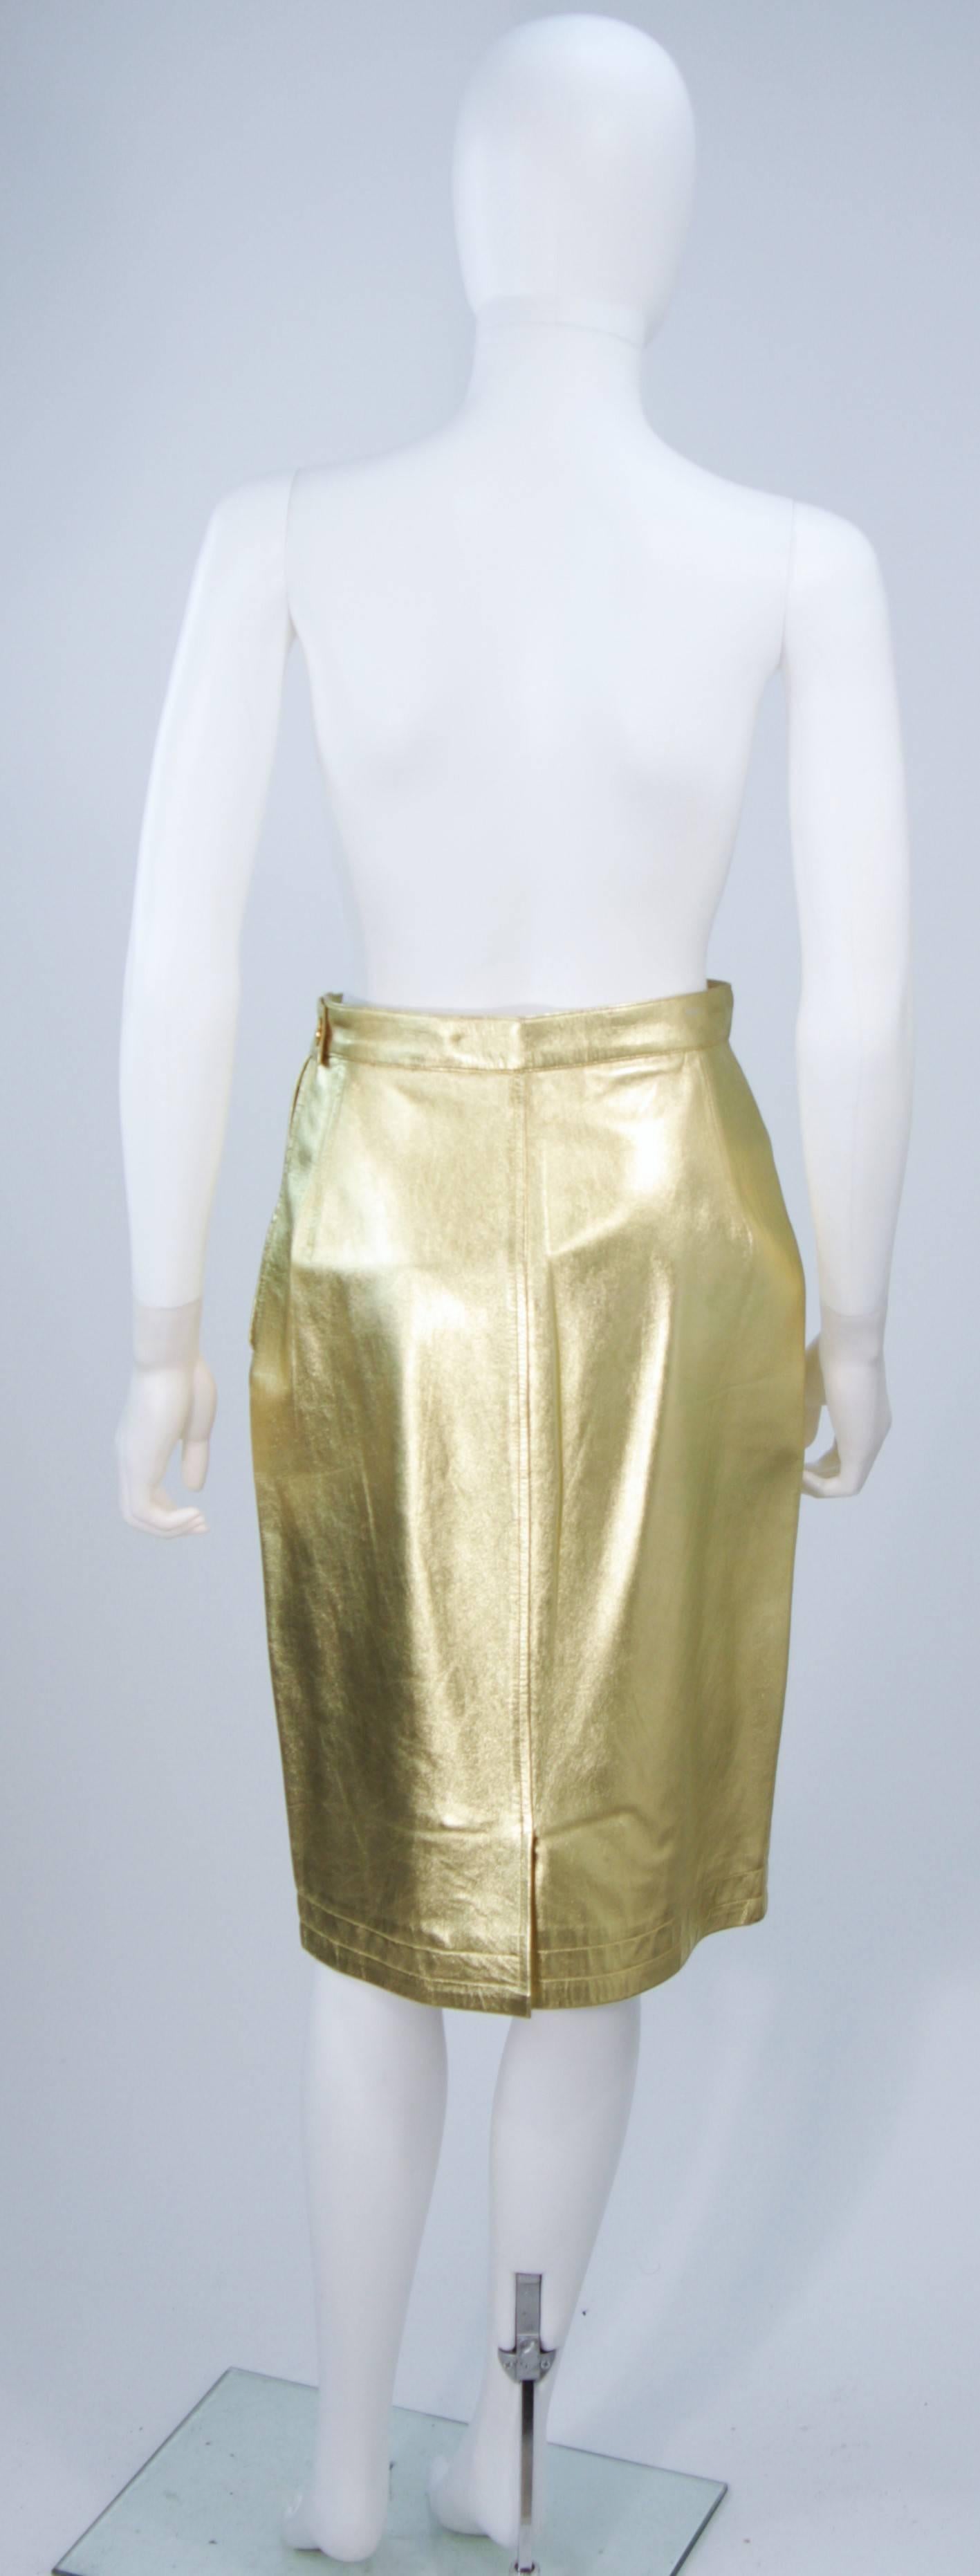 YVES SAINT LAURENT Gold Foil Metallic Leather Pencil Skirt Size 42 For Sale 1